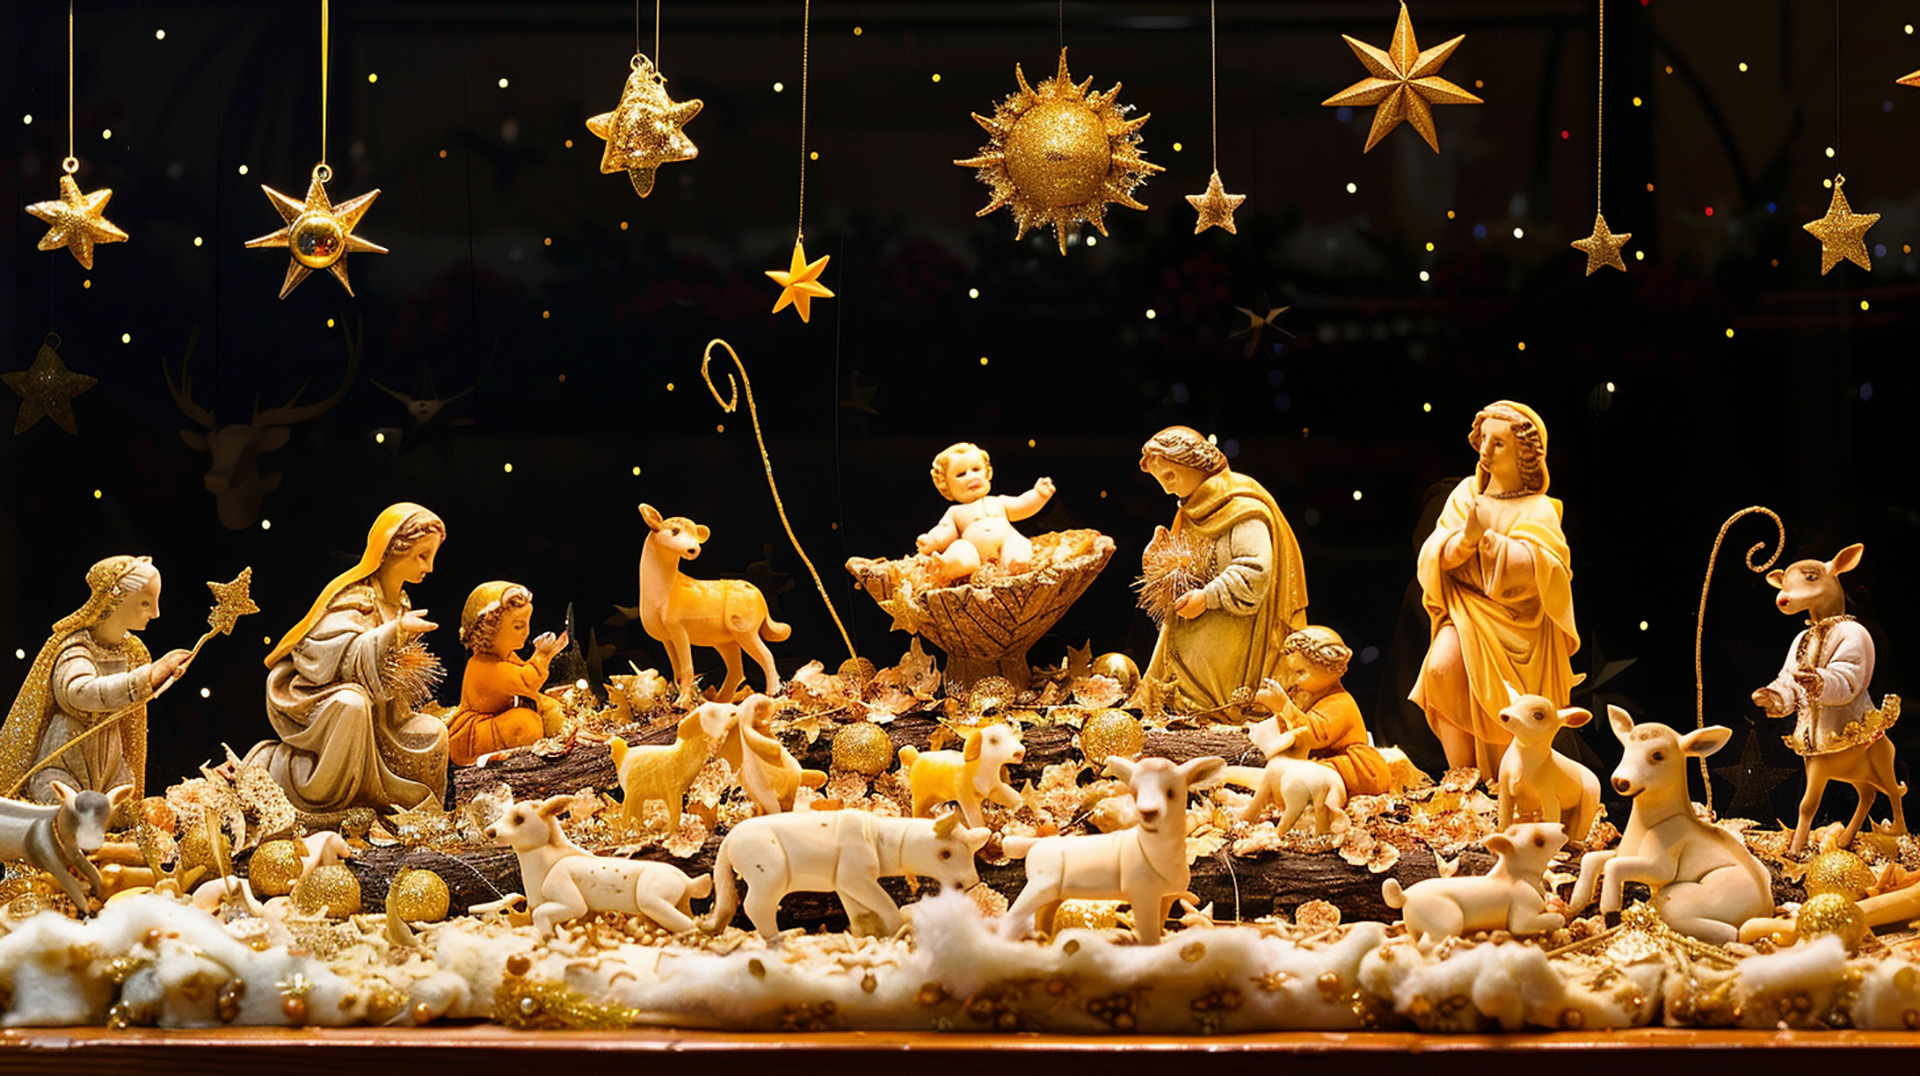 Christmas Reverence: Peaceful Religious Christmas Wallpaper